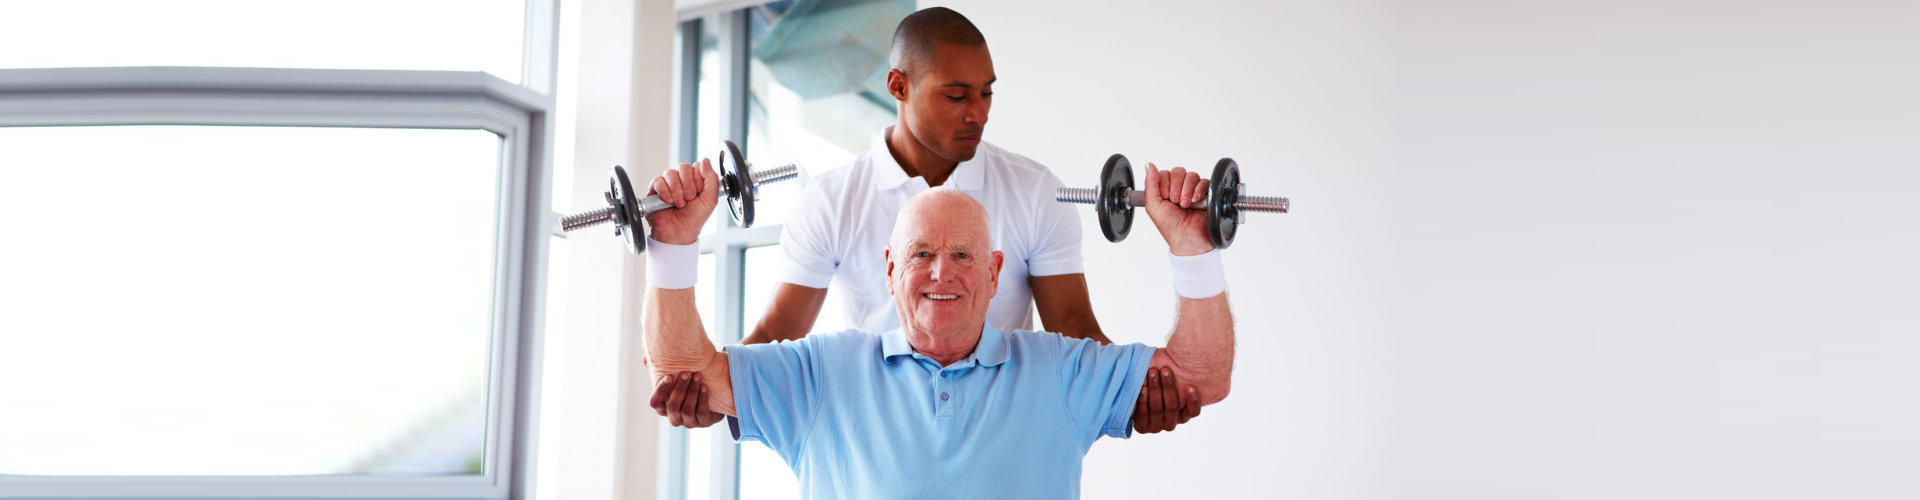 Caregiver assisting senior man doing an exercise